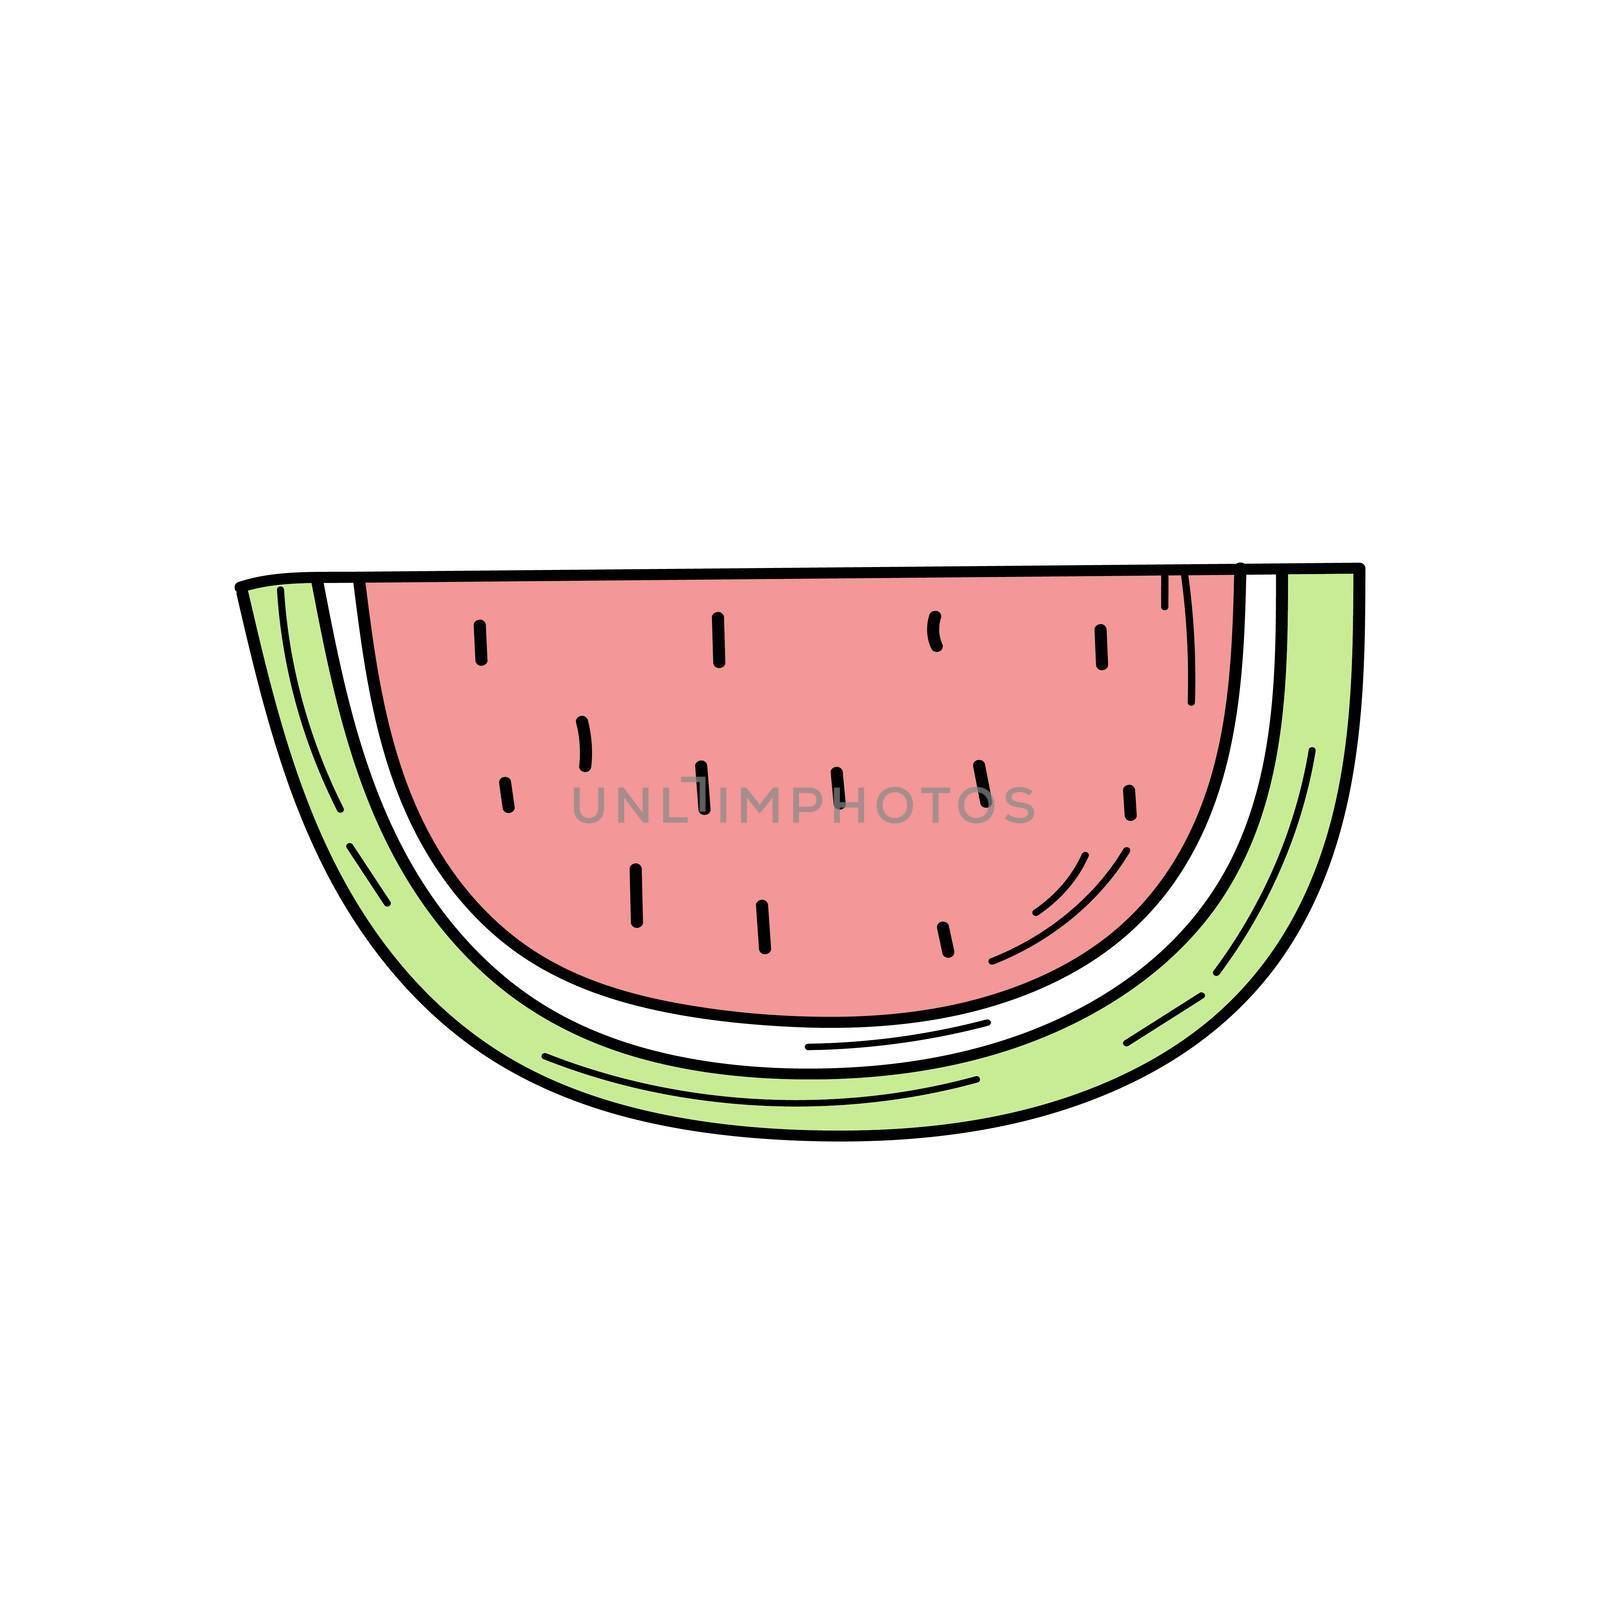 Watermelon Doodle icon. Simple hand drawn Watermelon icon on white by natali_brill